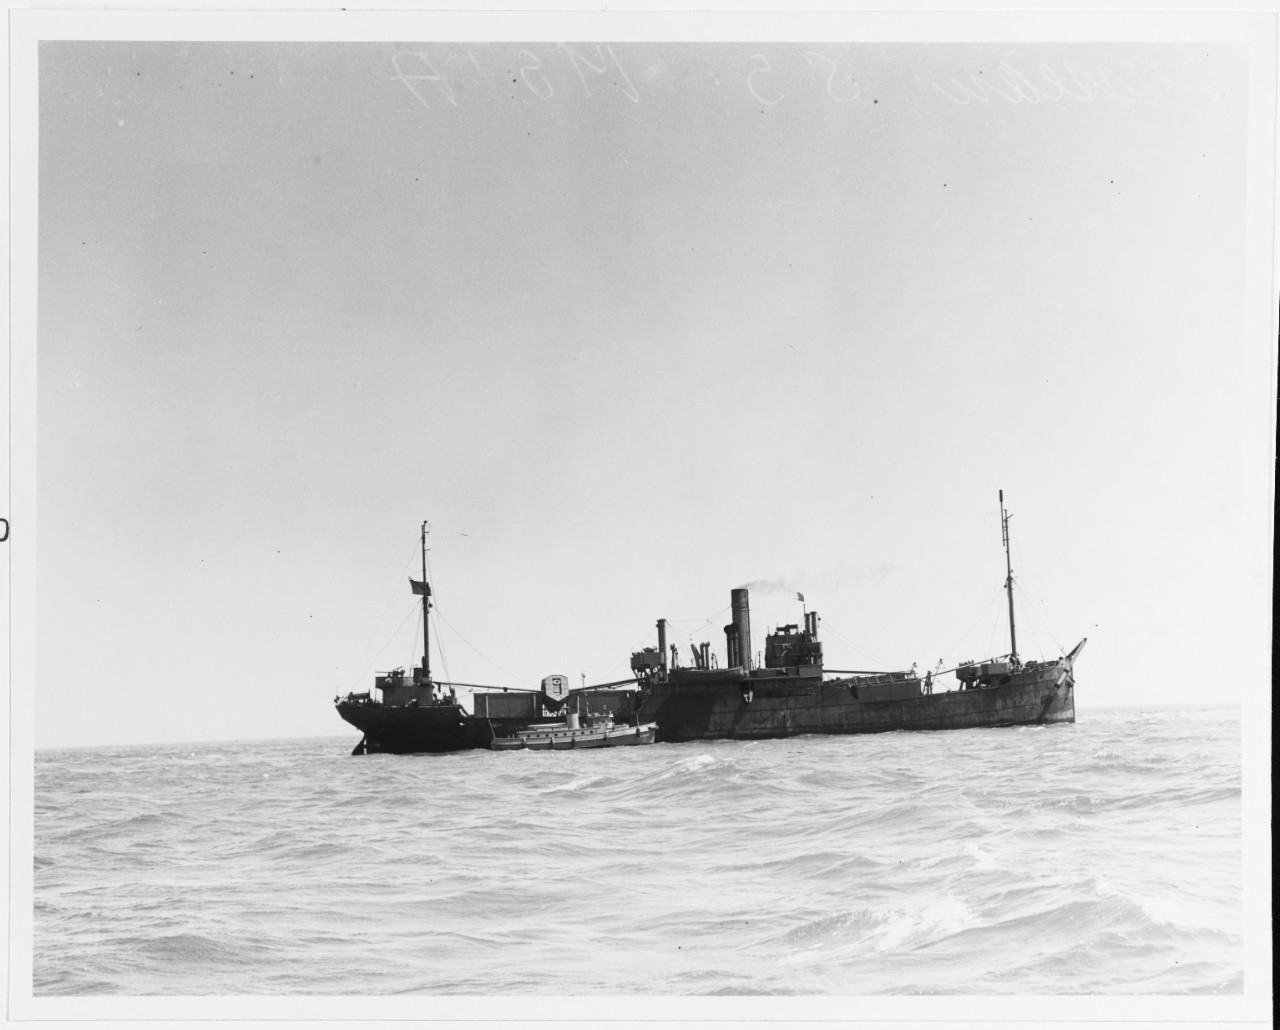 S.S. MSTA (U.S.S.R. Merchant Cargo Ship, 1921-1944)